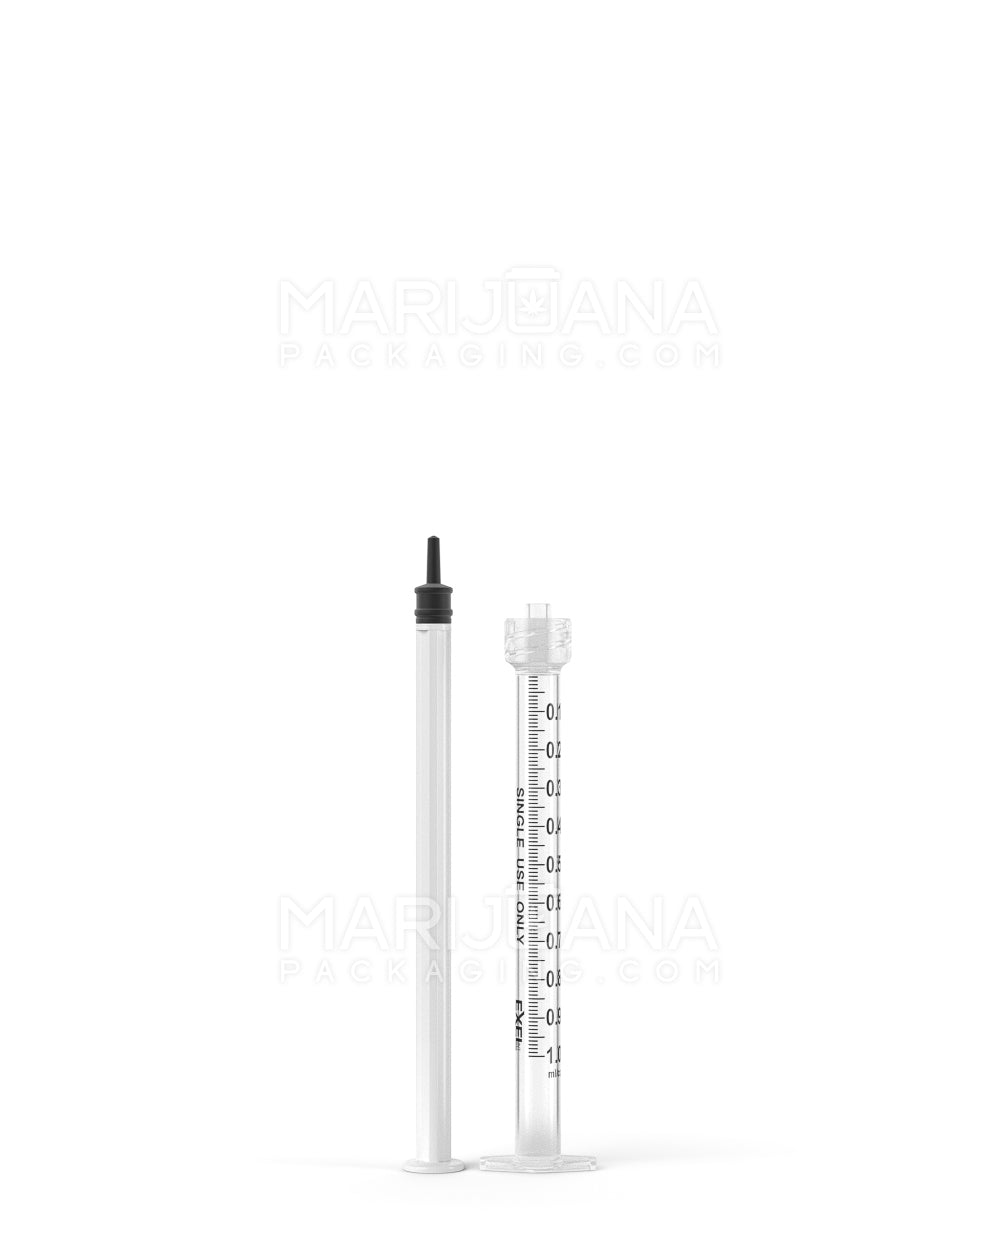 Luer Lock | Plastic Dab Applicator Syringes | 1mL - 0.1mL Increments - 100 Count - 3